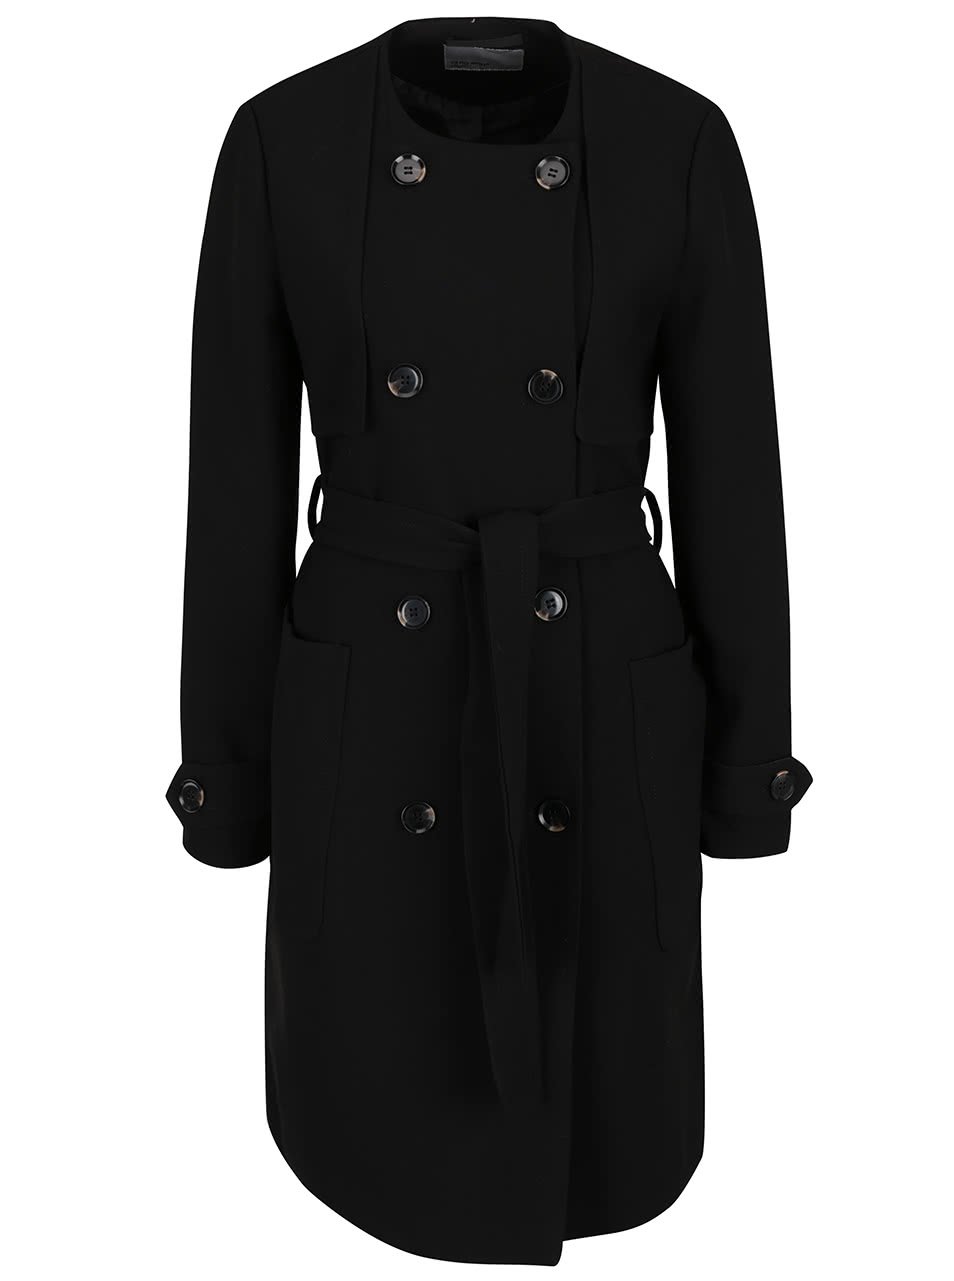 Černý kabát s dvouřadým zapínáním a hlubokými kapsami Vero Moda Janna